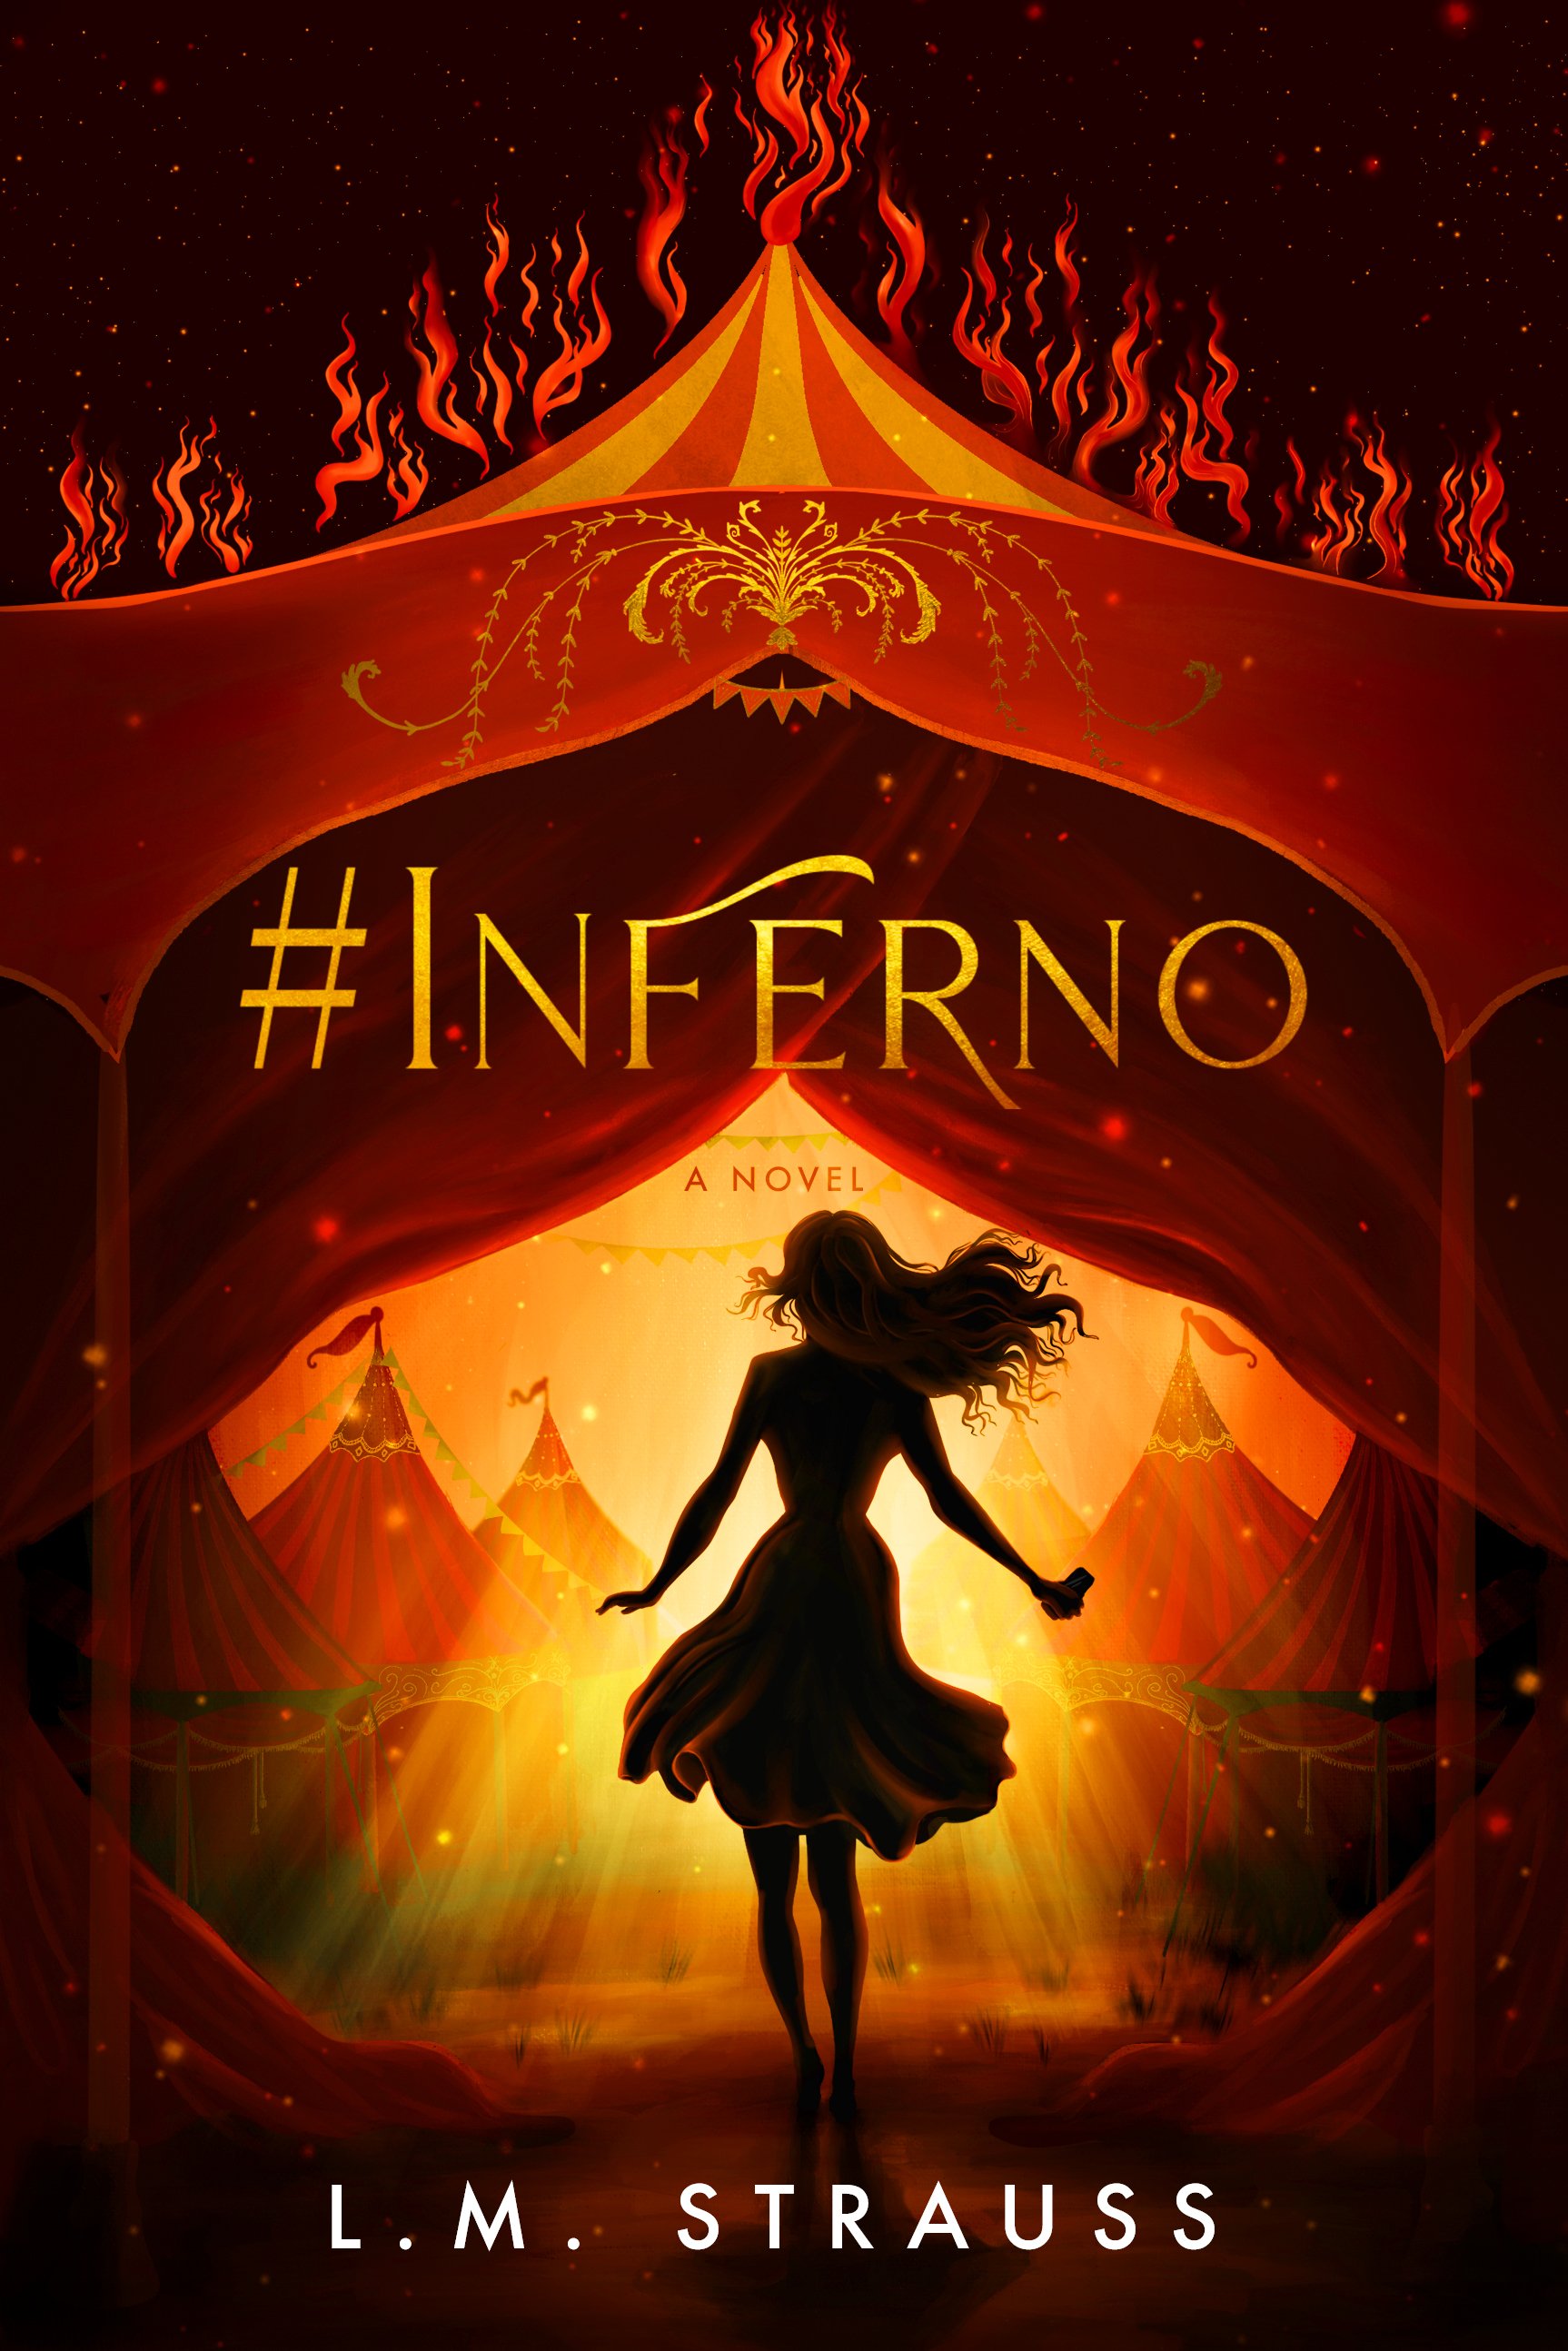 Inferno-ebook cover.jpg